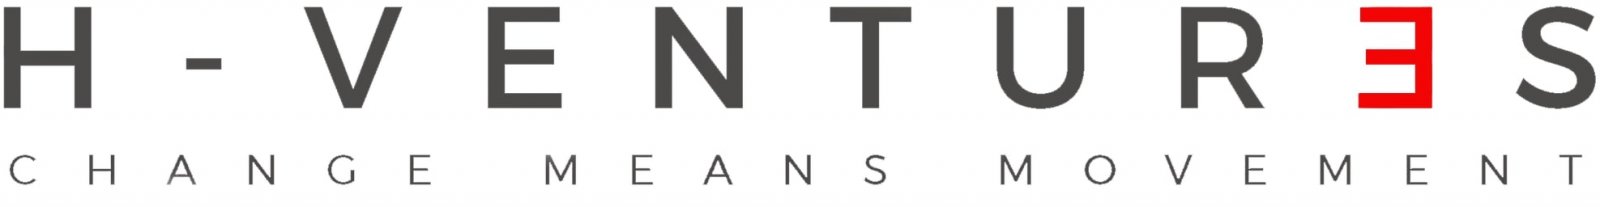 Logo H-Ventures Group 